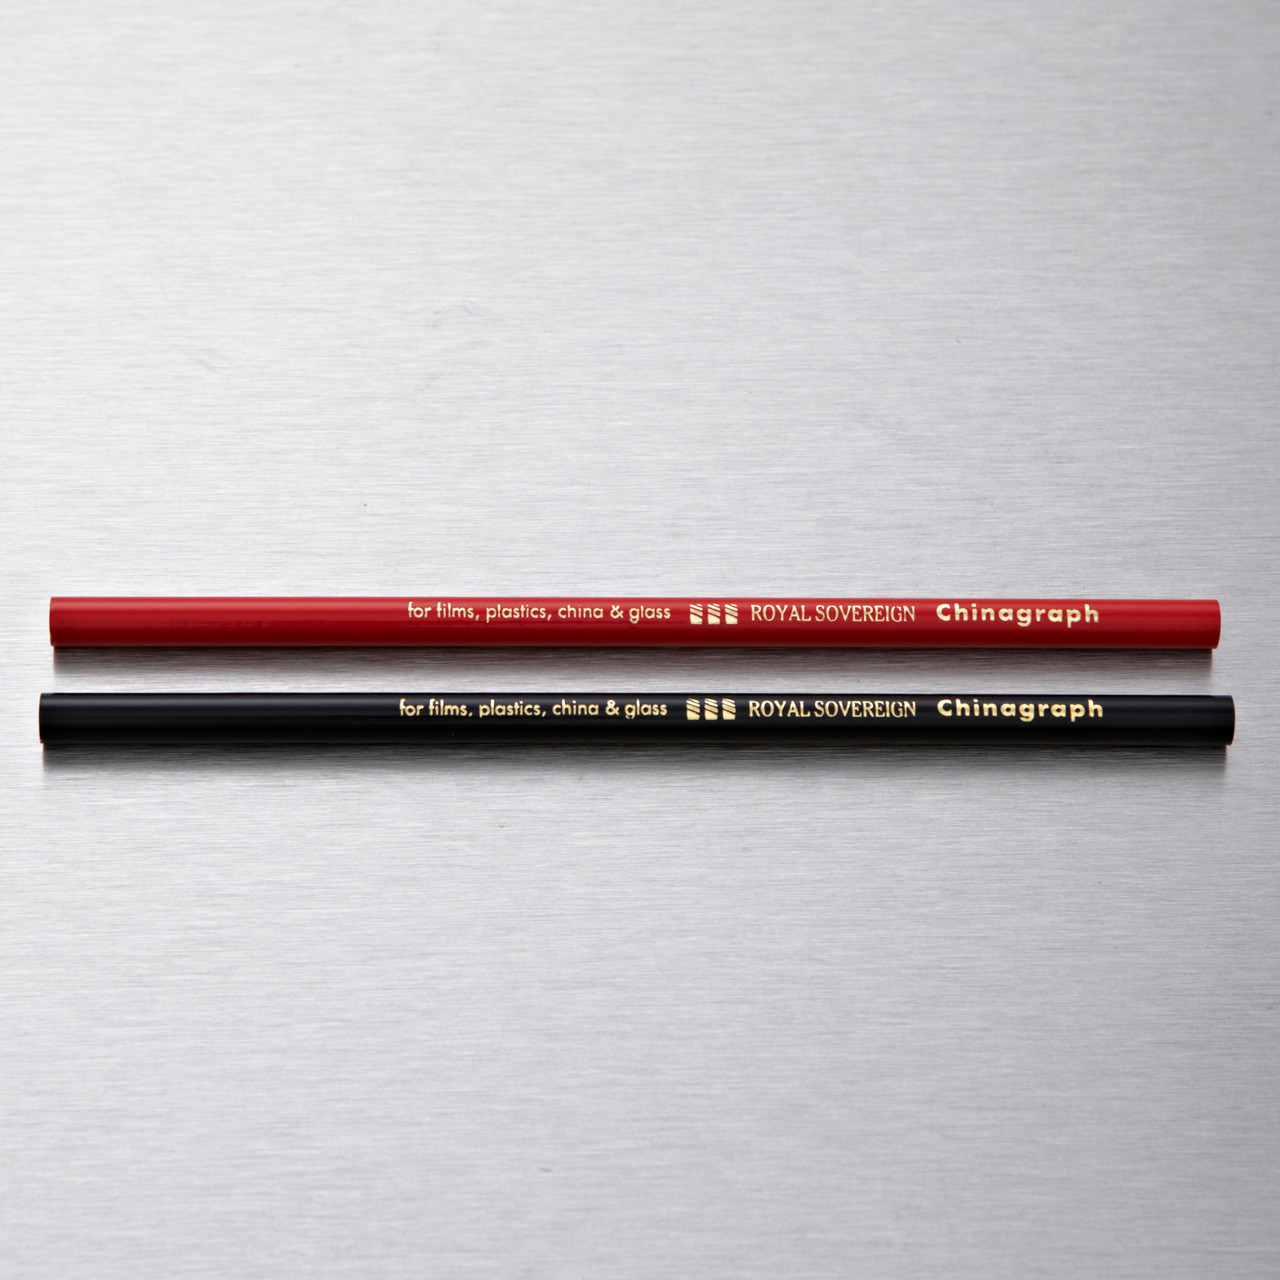 West Chinagraph Pencils